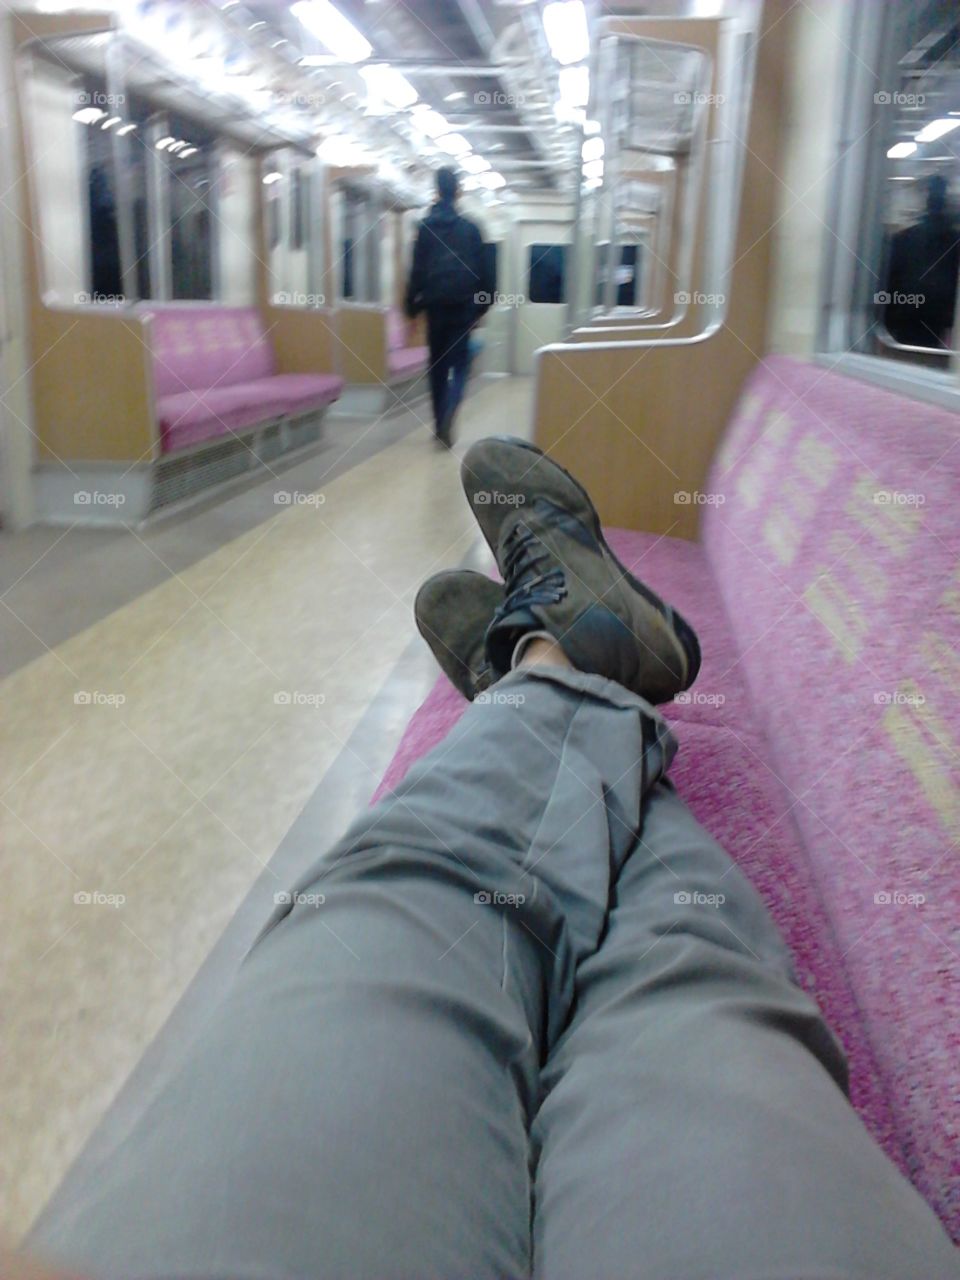 I'm on a Night Train